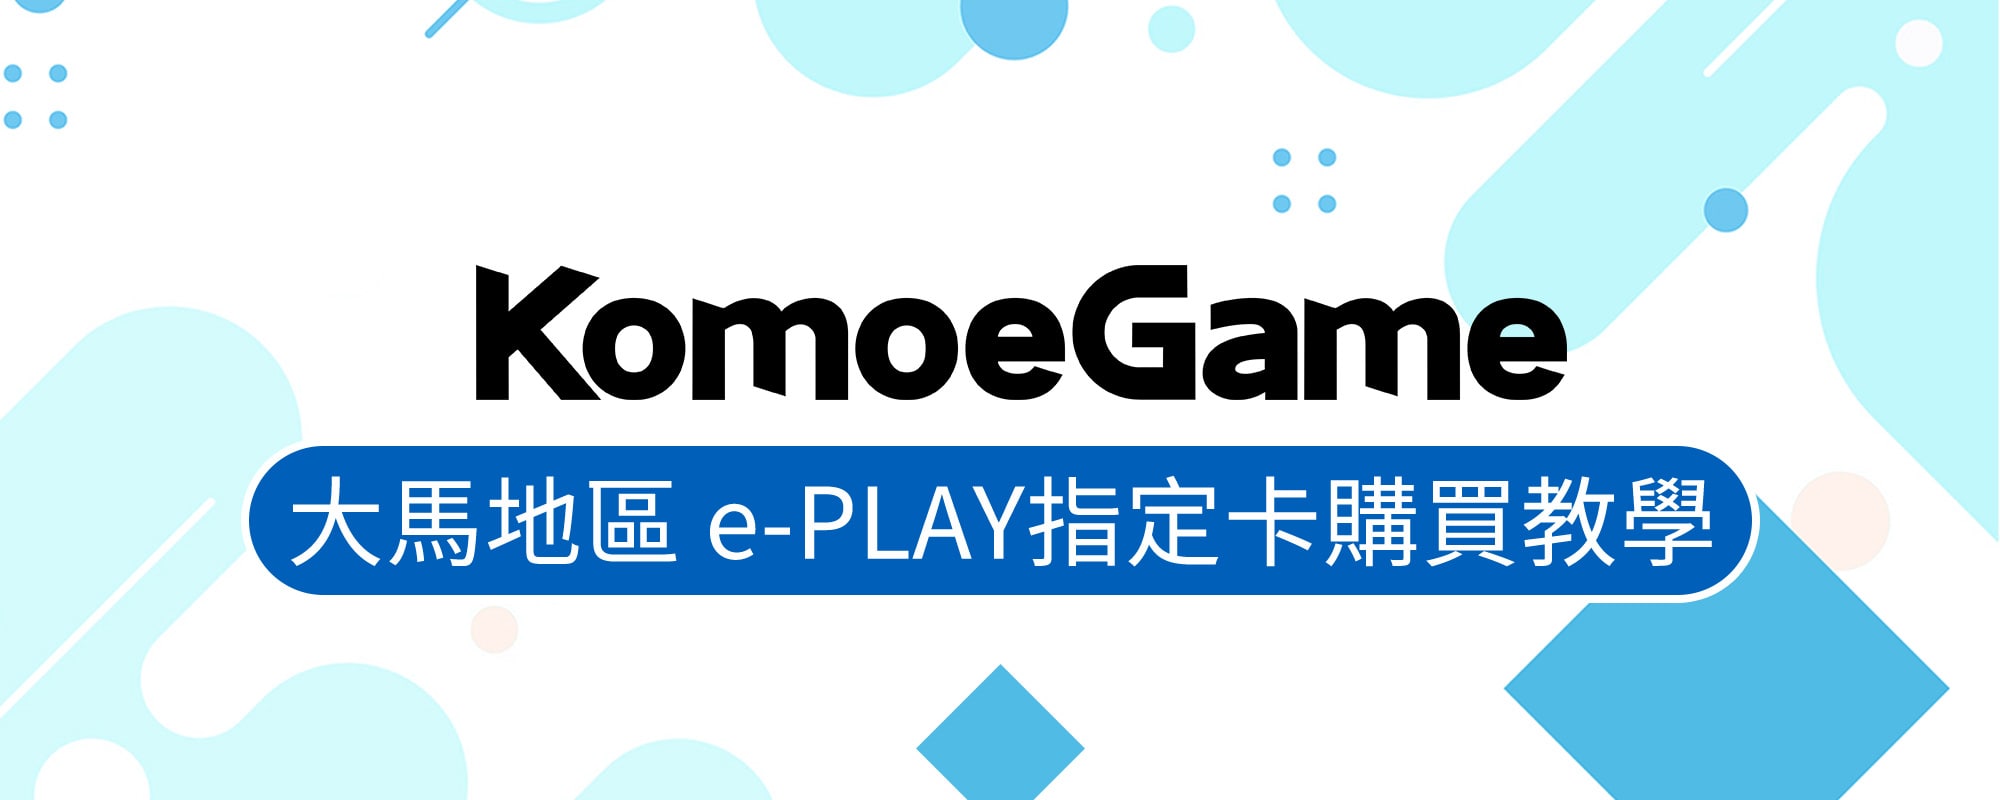   KOMOE GAME儲值 – 大馬地區 e-PLAY